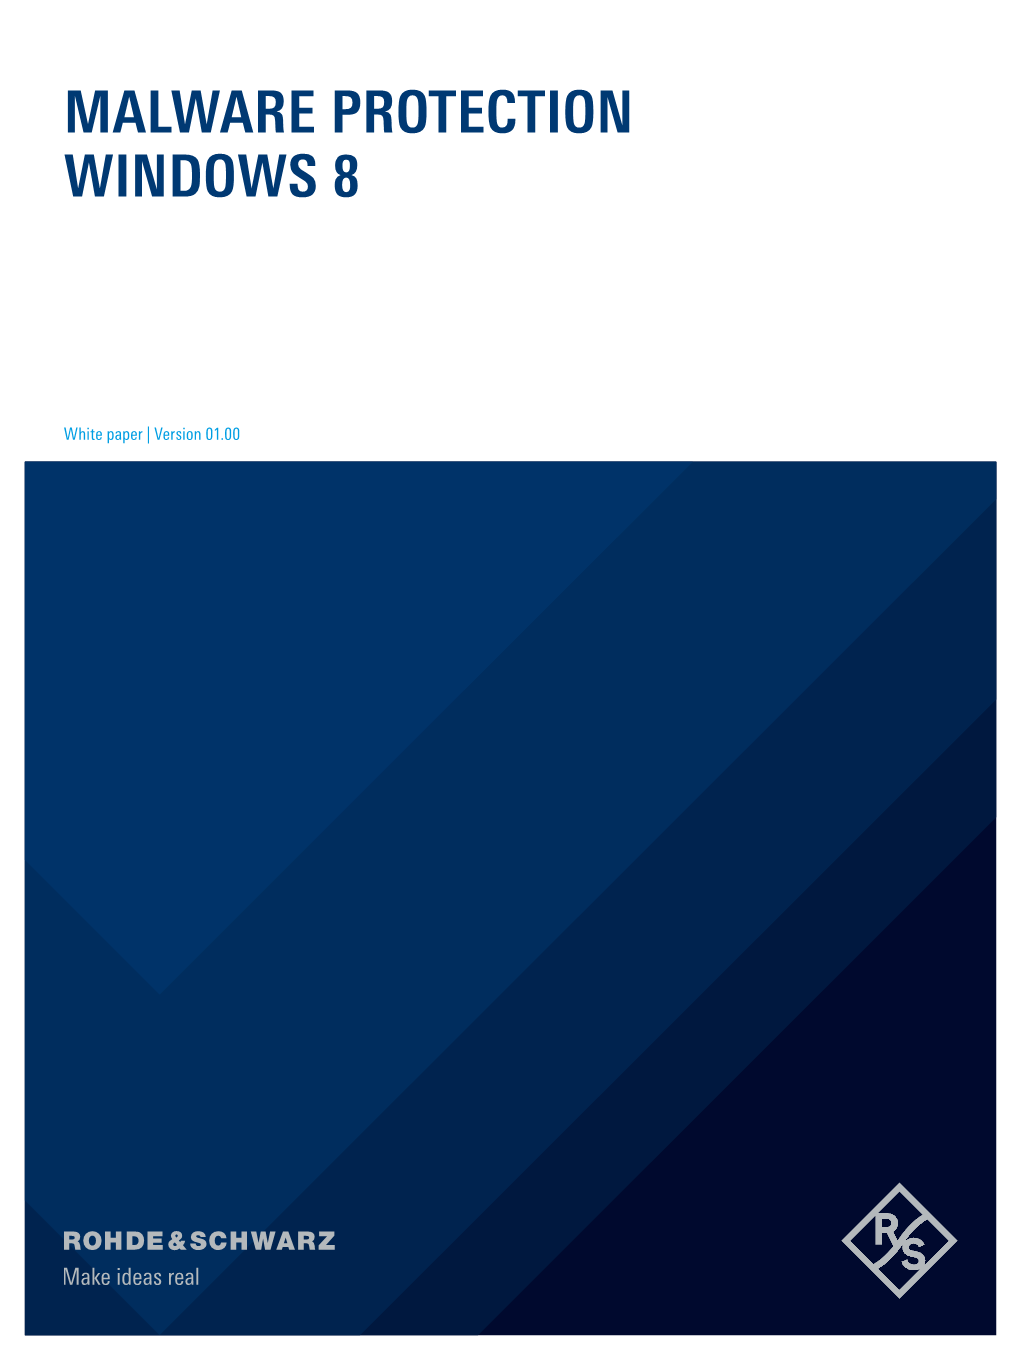 ©Rohde & Schwarz; Malware Protection Windows 8